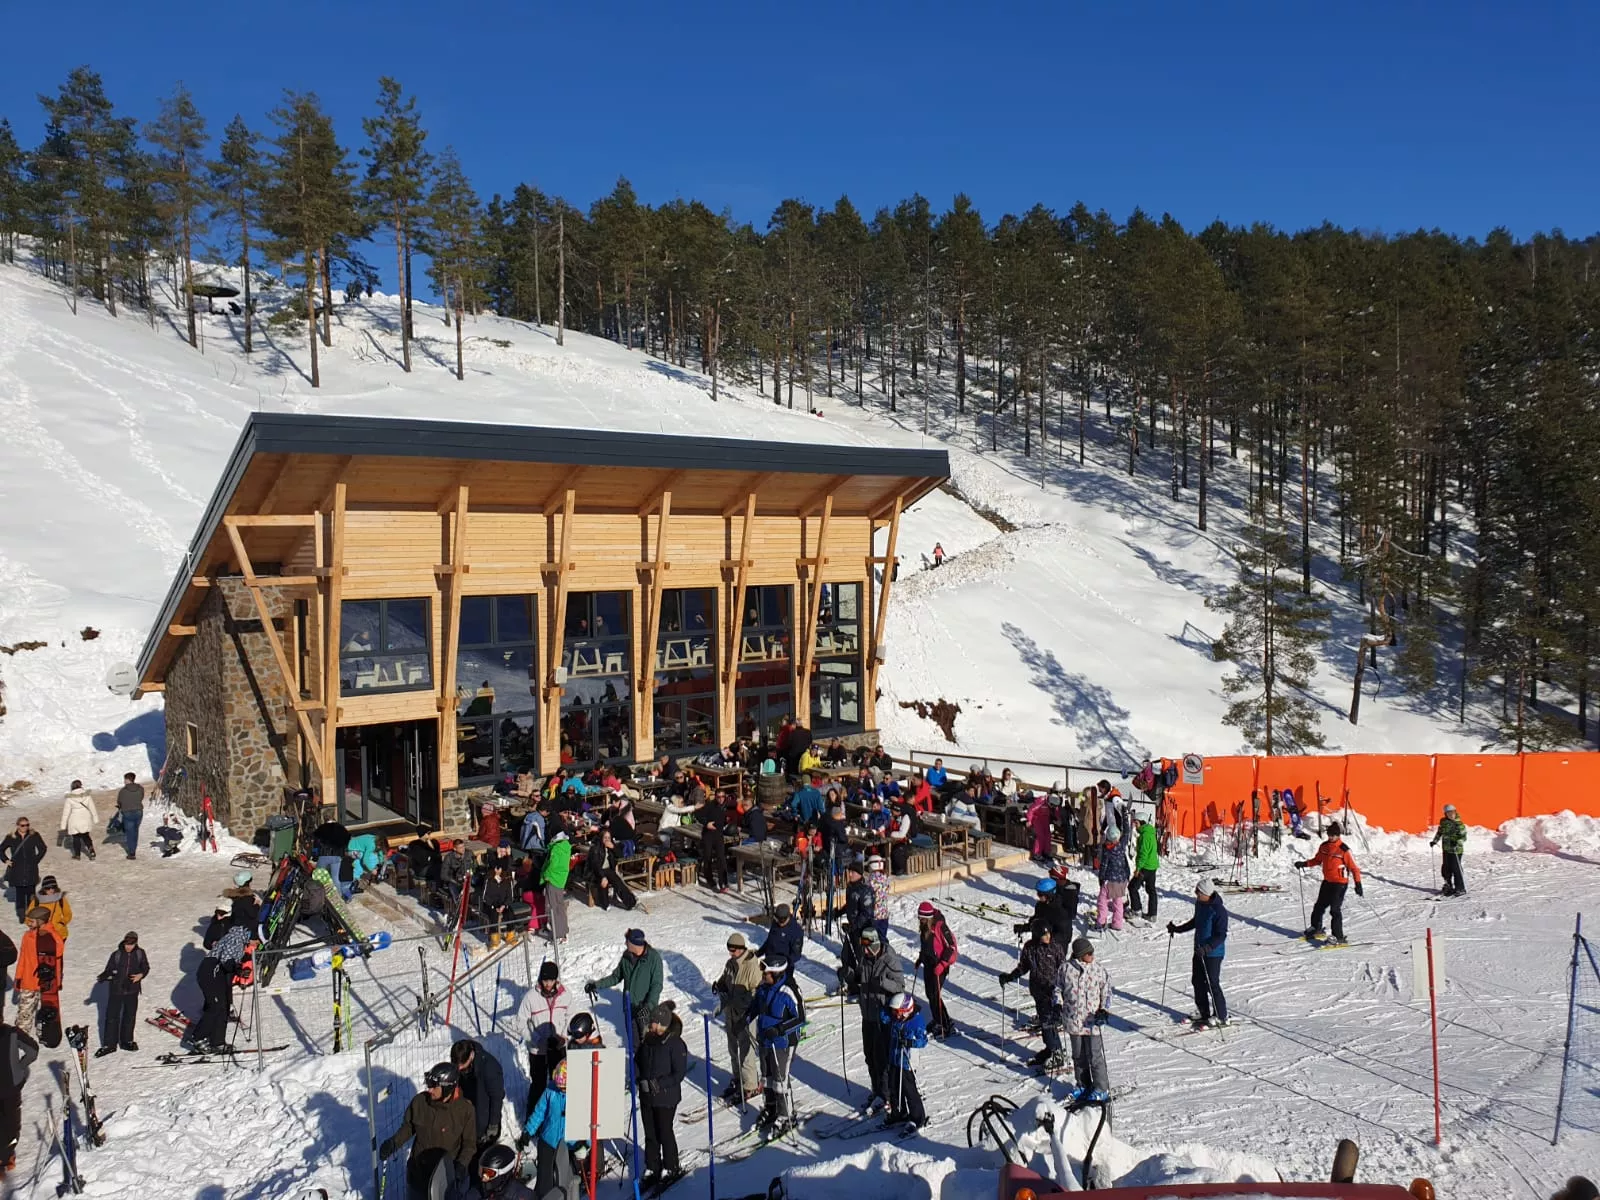 Divcibare Ski Resort in Serbia, Europe | Snowboarding,Skiing - Rated 4